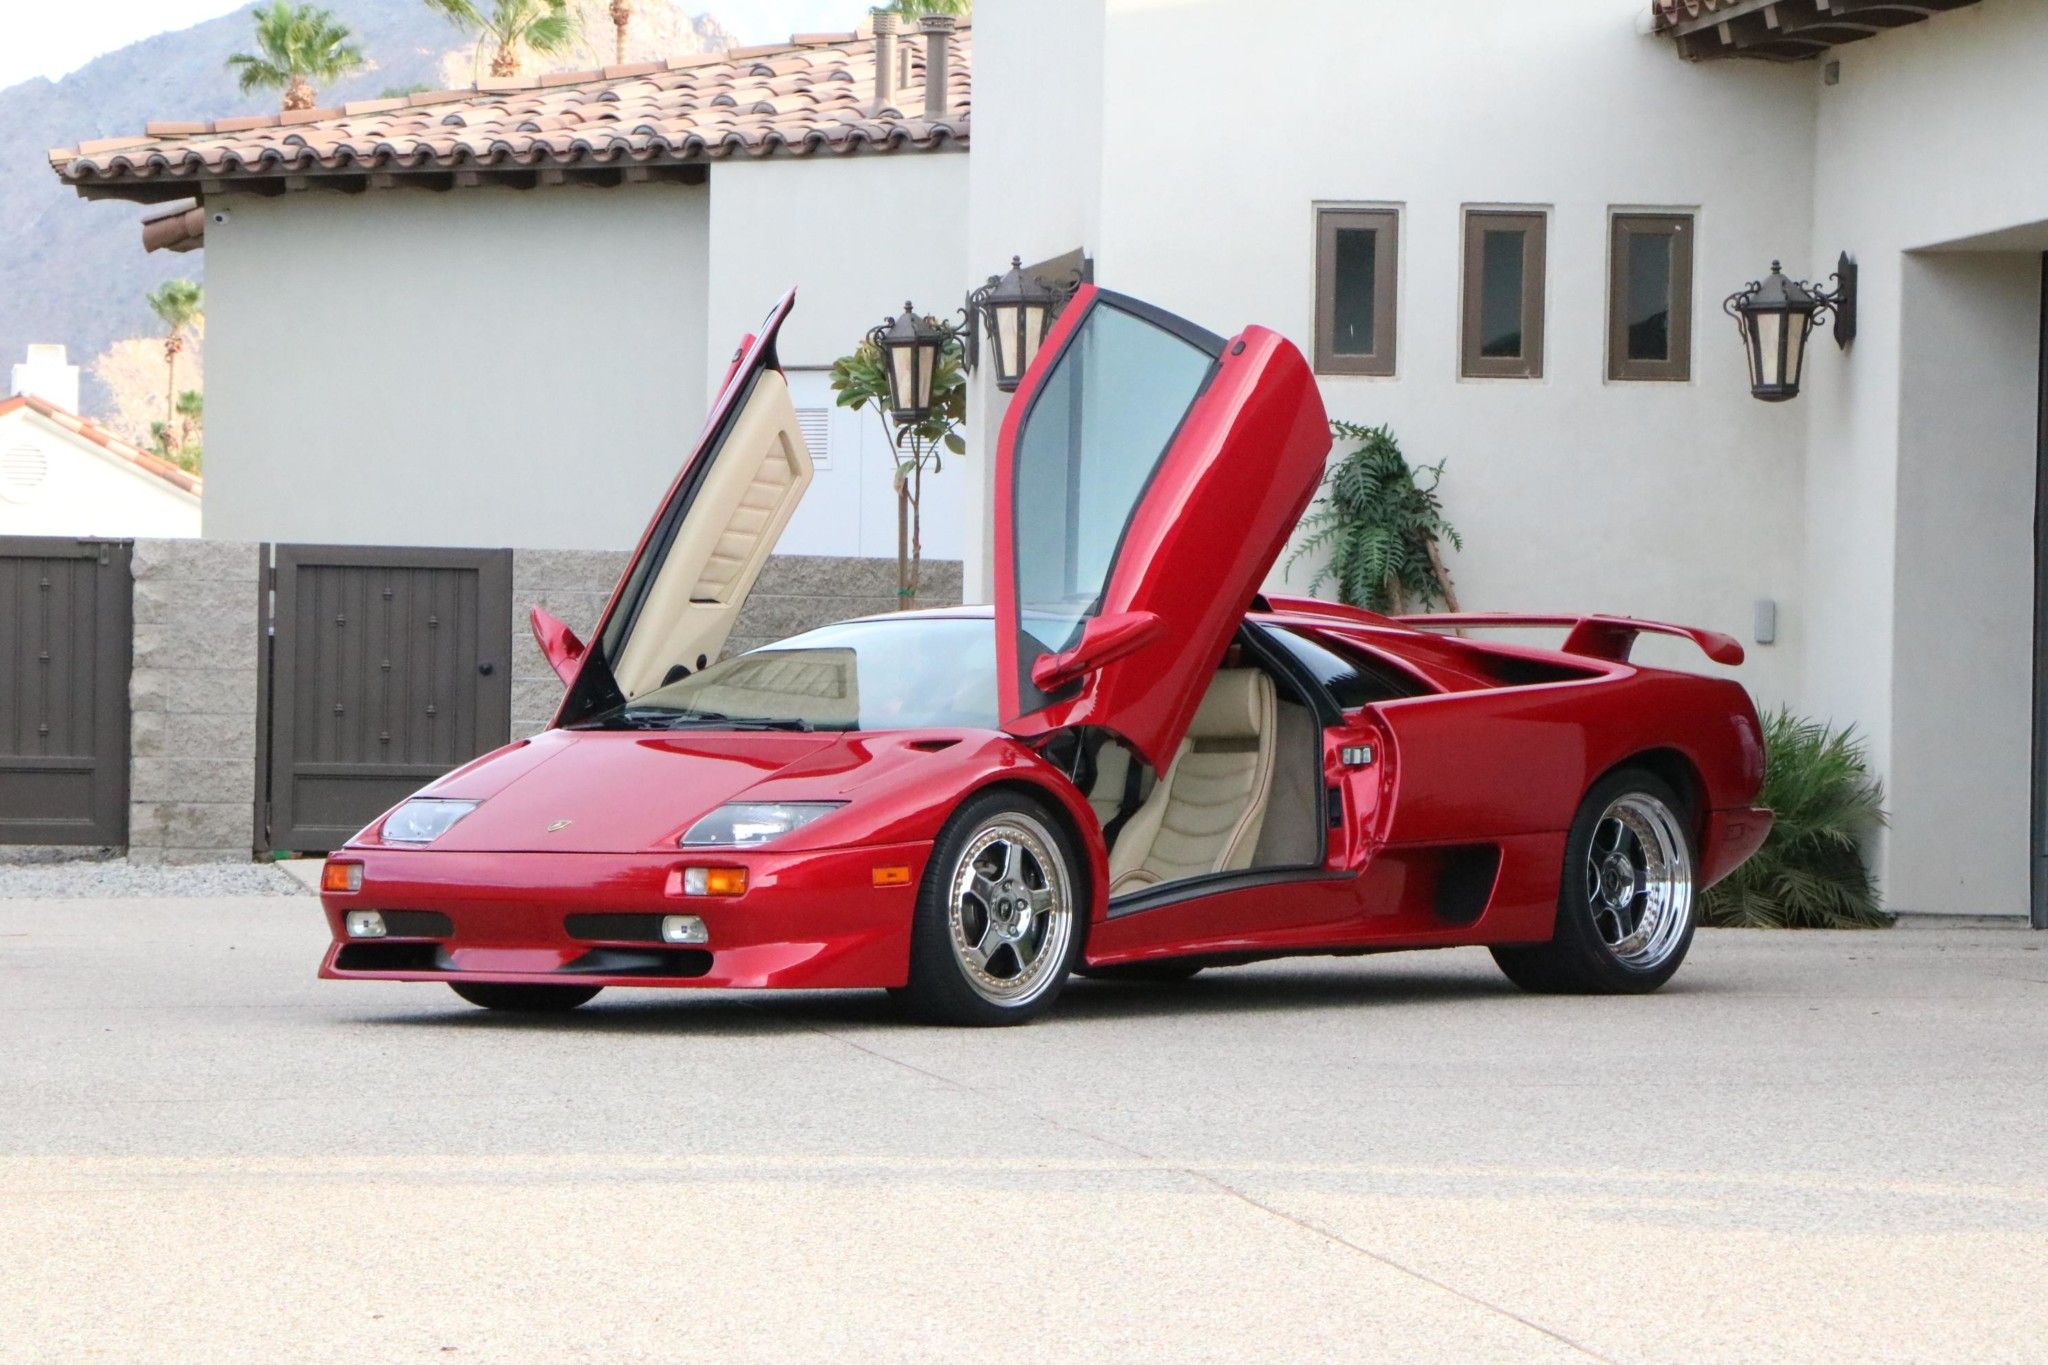 1999 Red Lamborghini Diablo with doors open